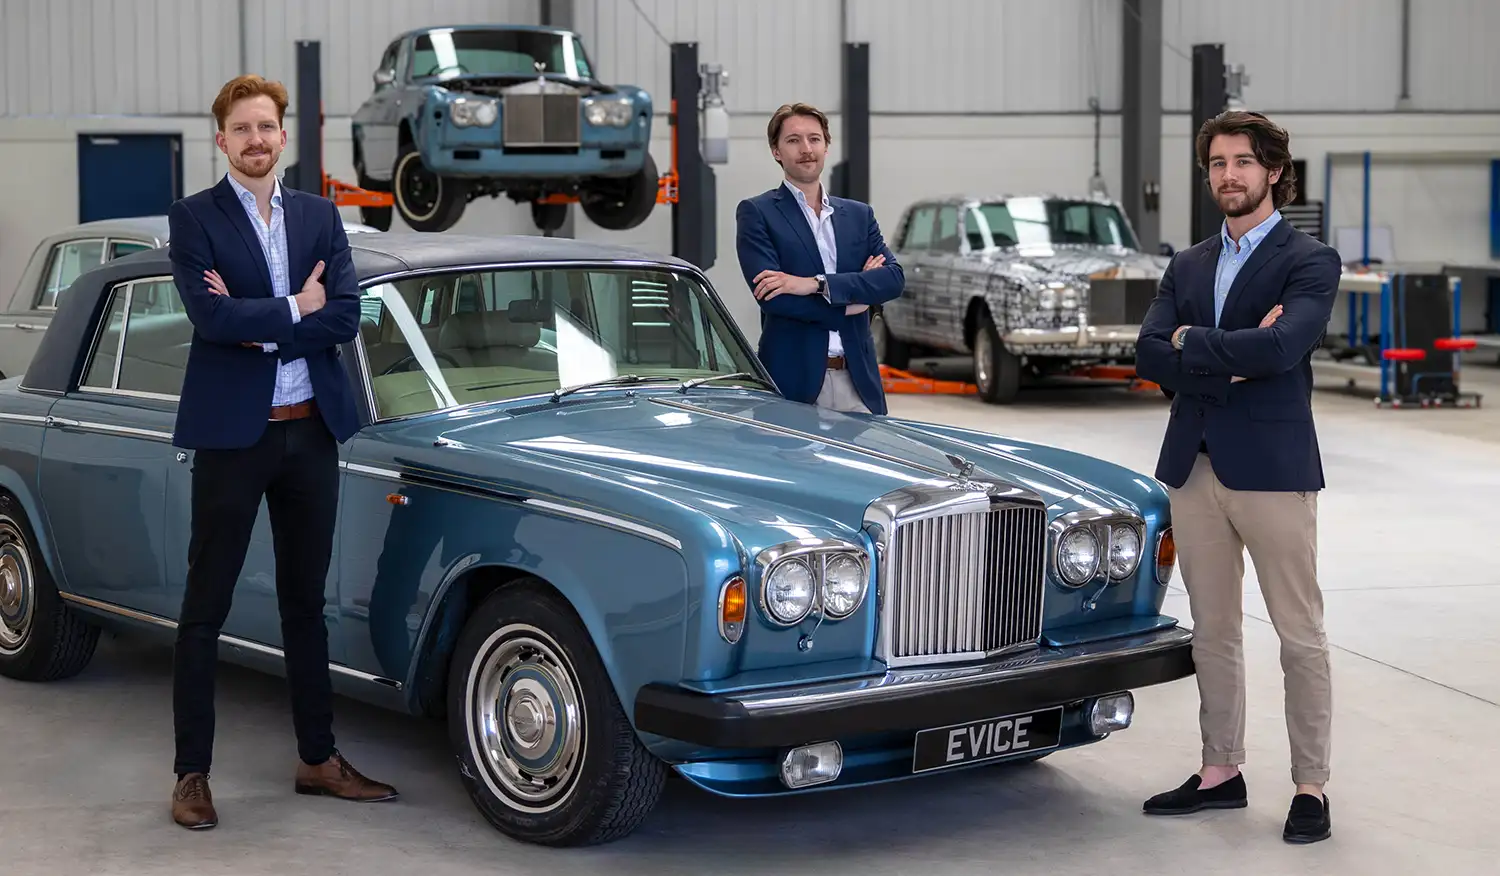 Evice reveals its reimagined classic Rolls-Royce prototype